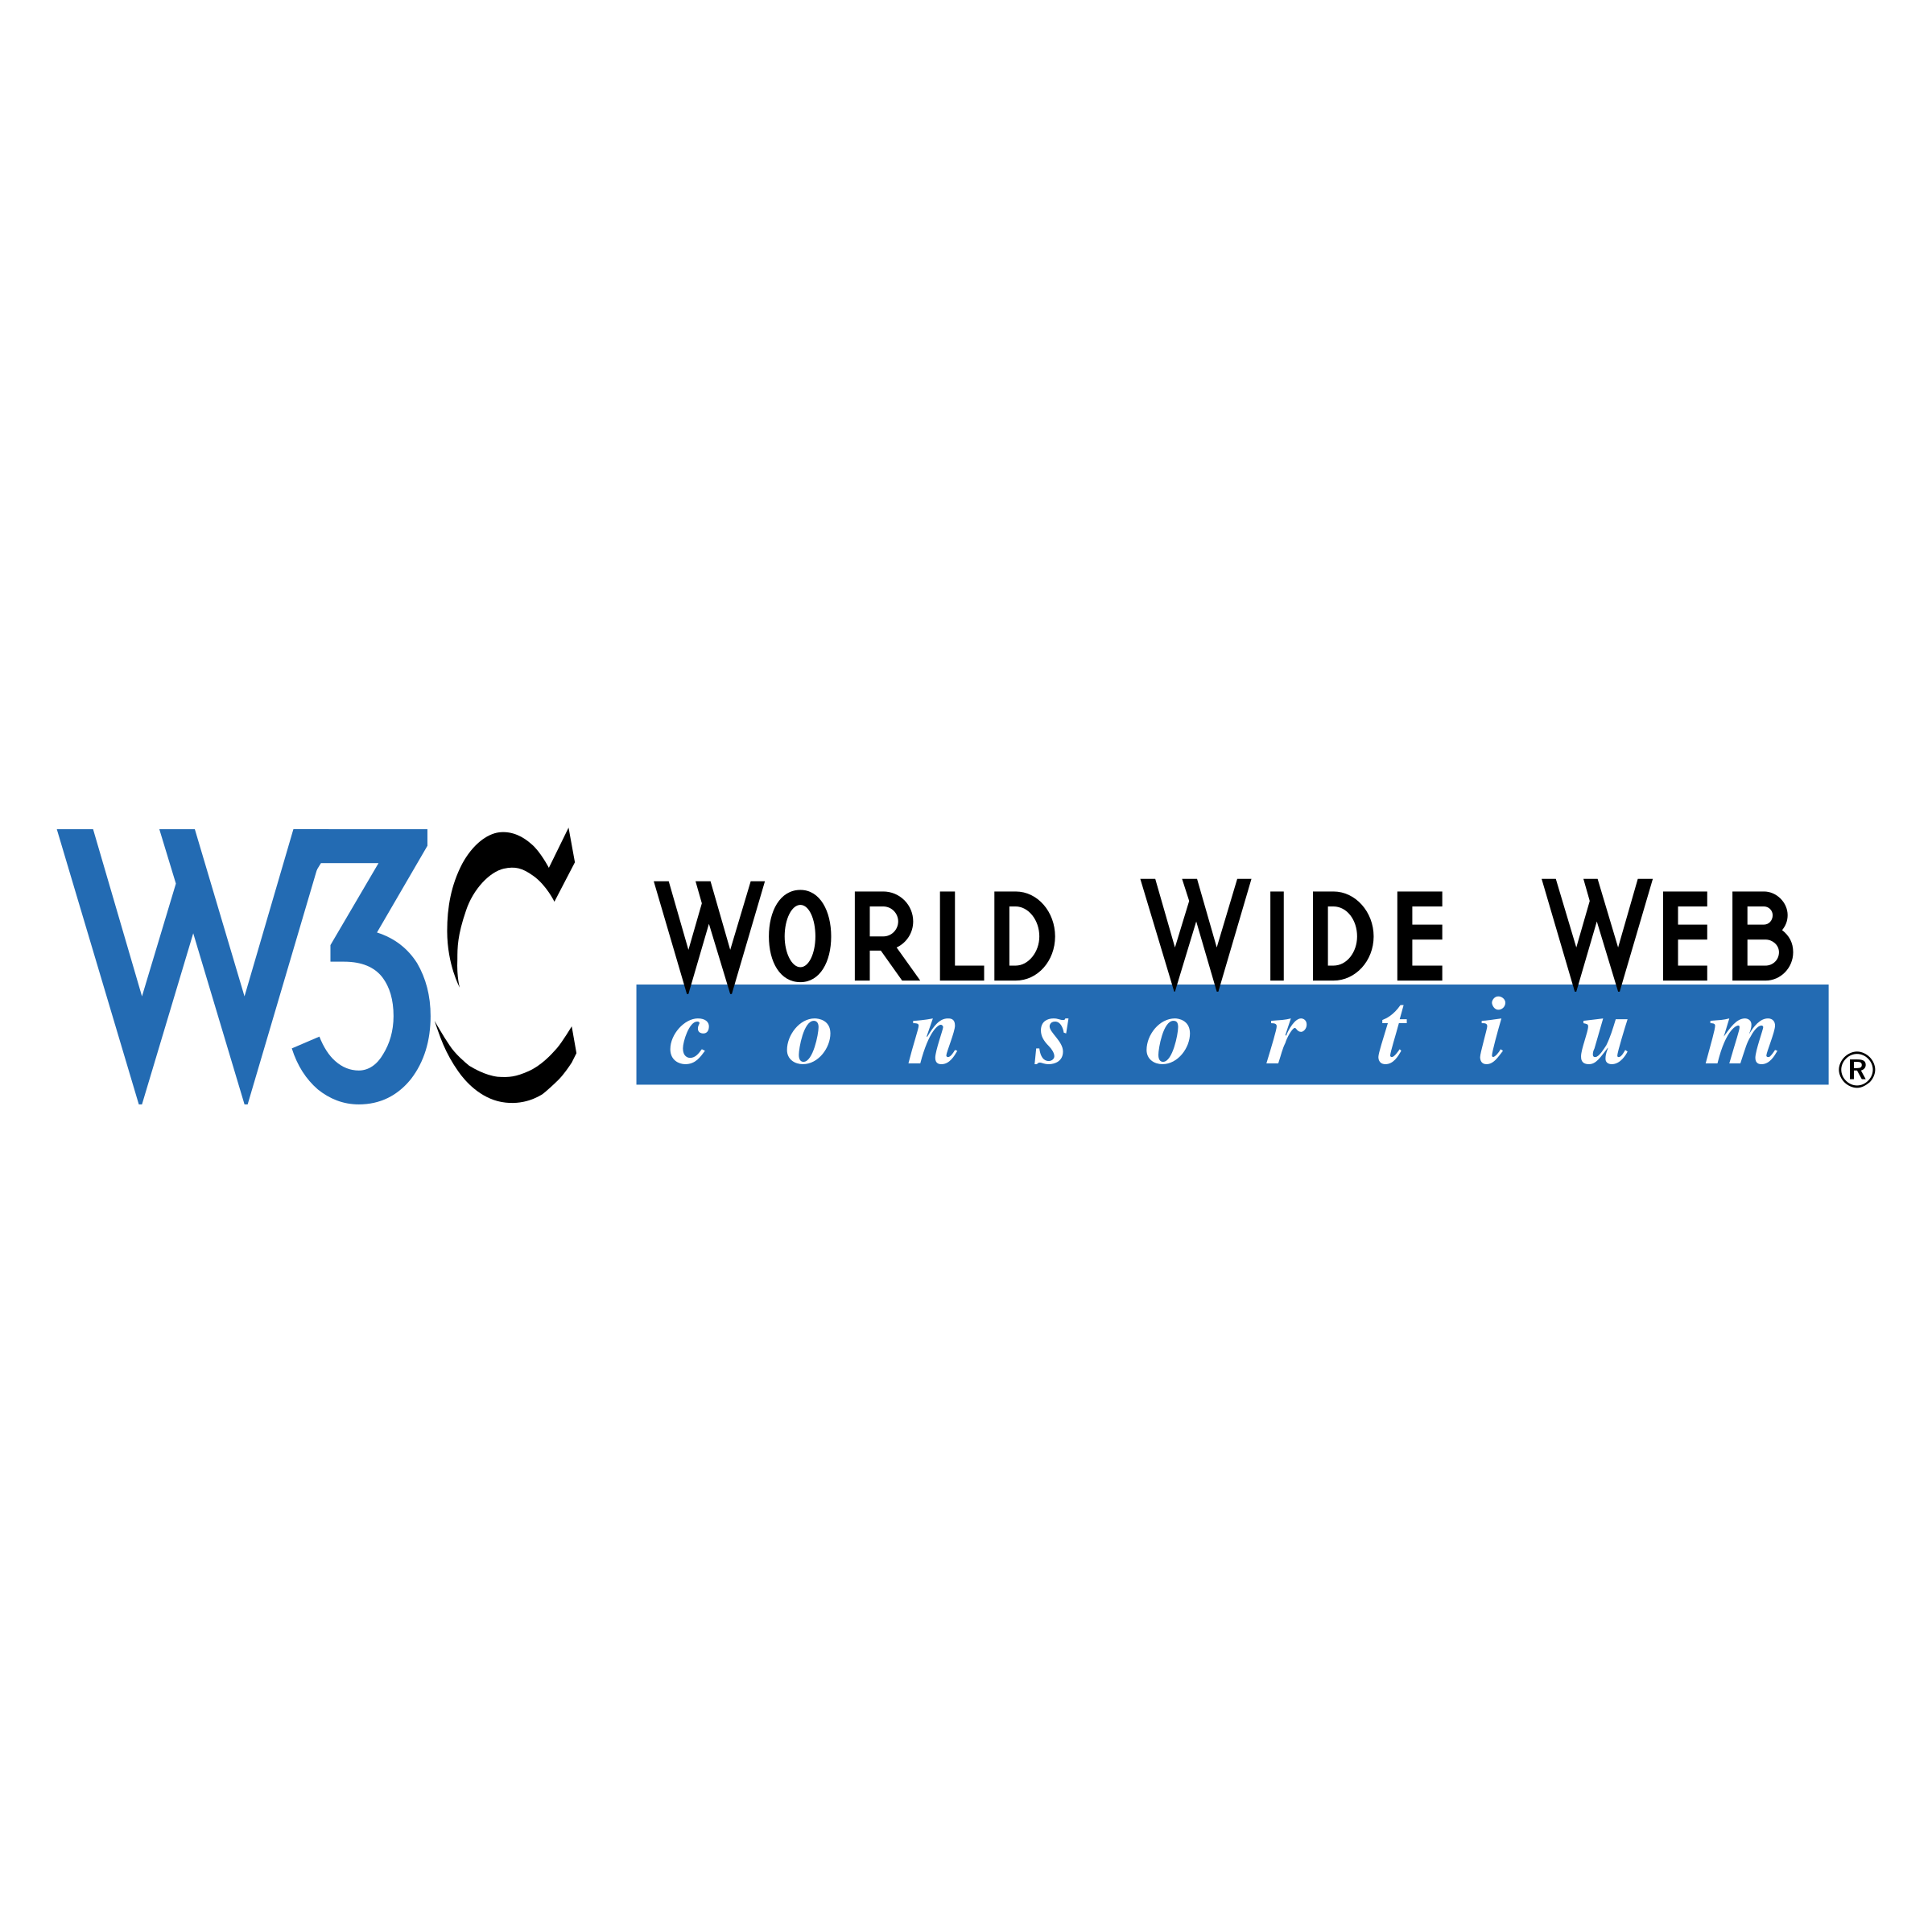 W3C Logo - W3C Logo PNG Transparent & SVG Vector - Freebie Supply